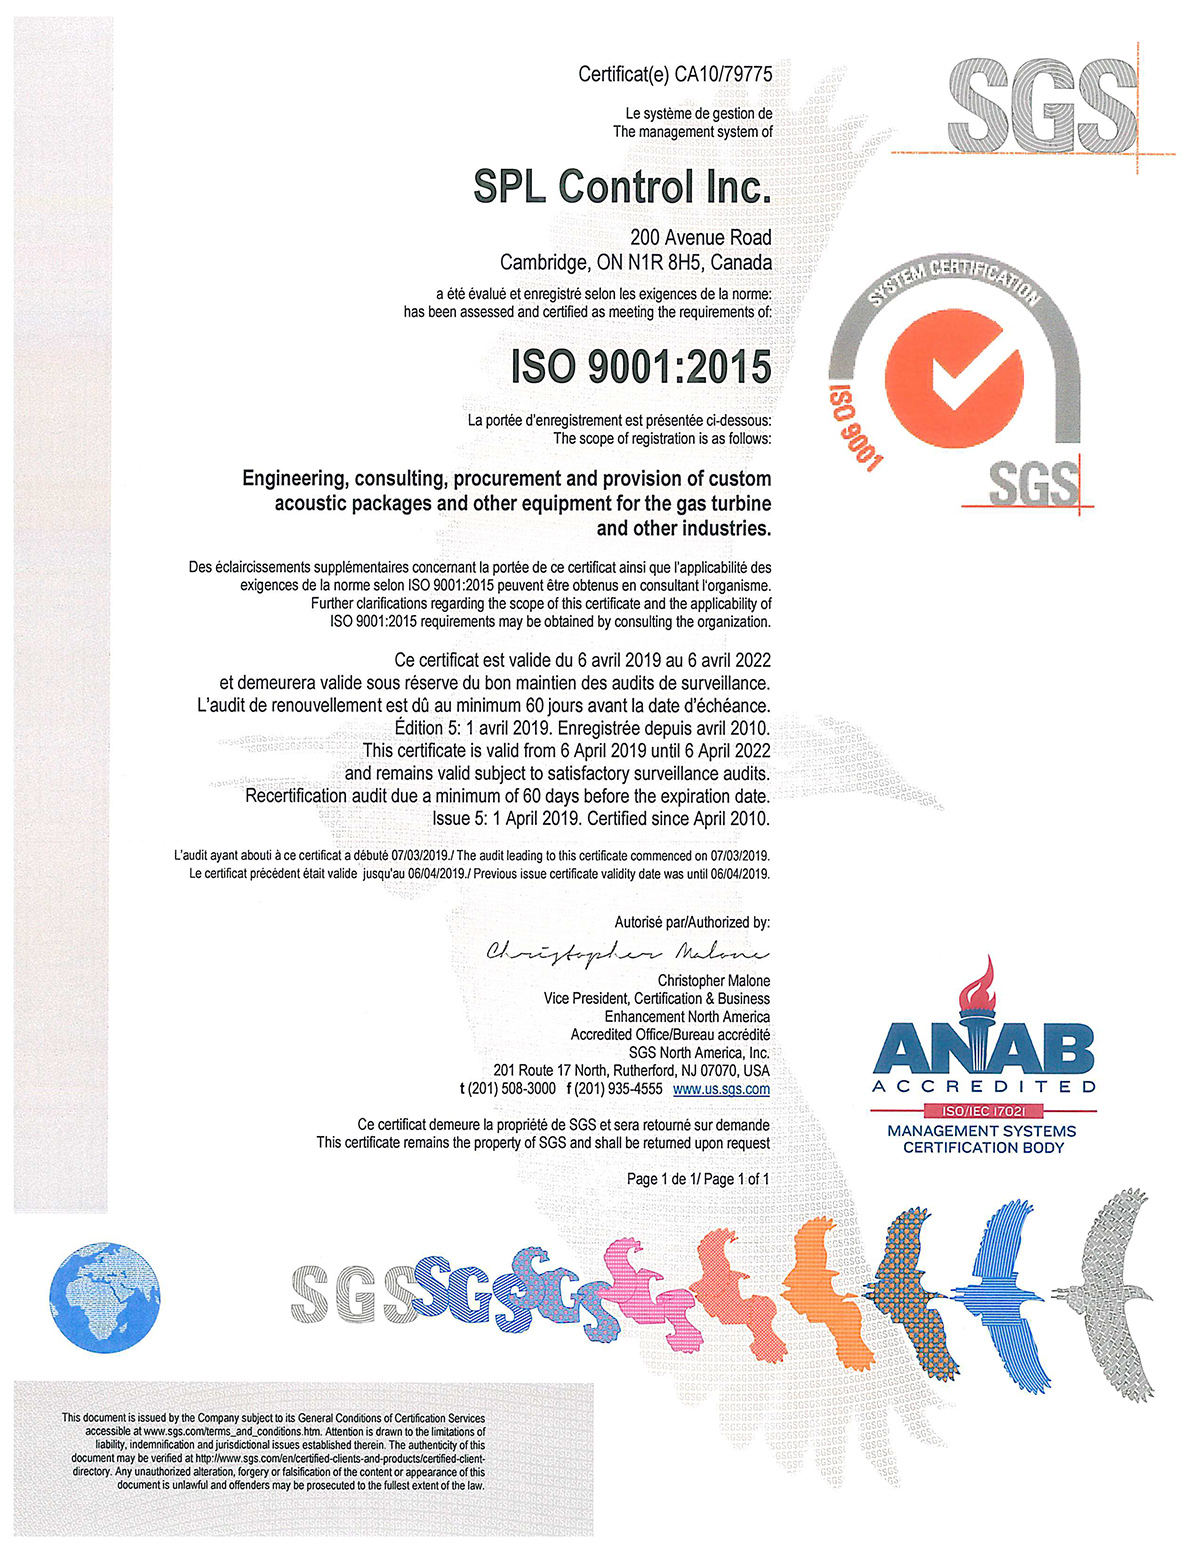 SPL Control Inc. ISO Certificate 2022